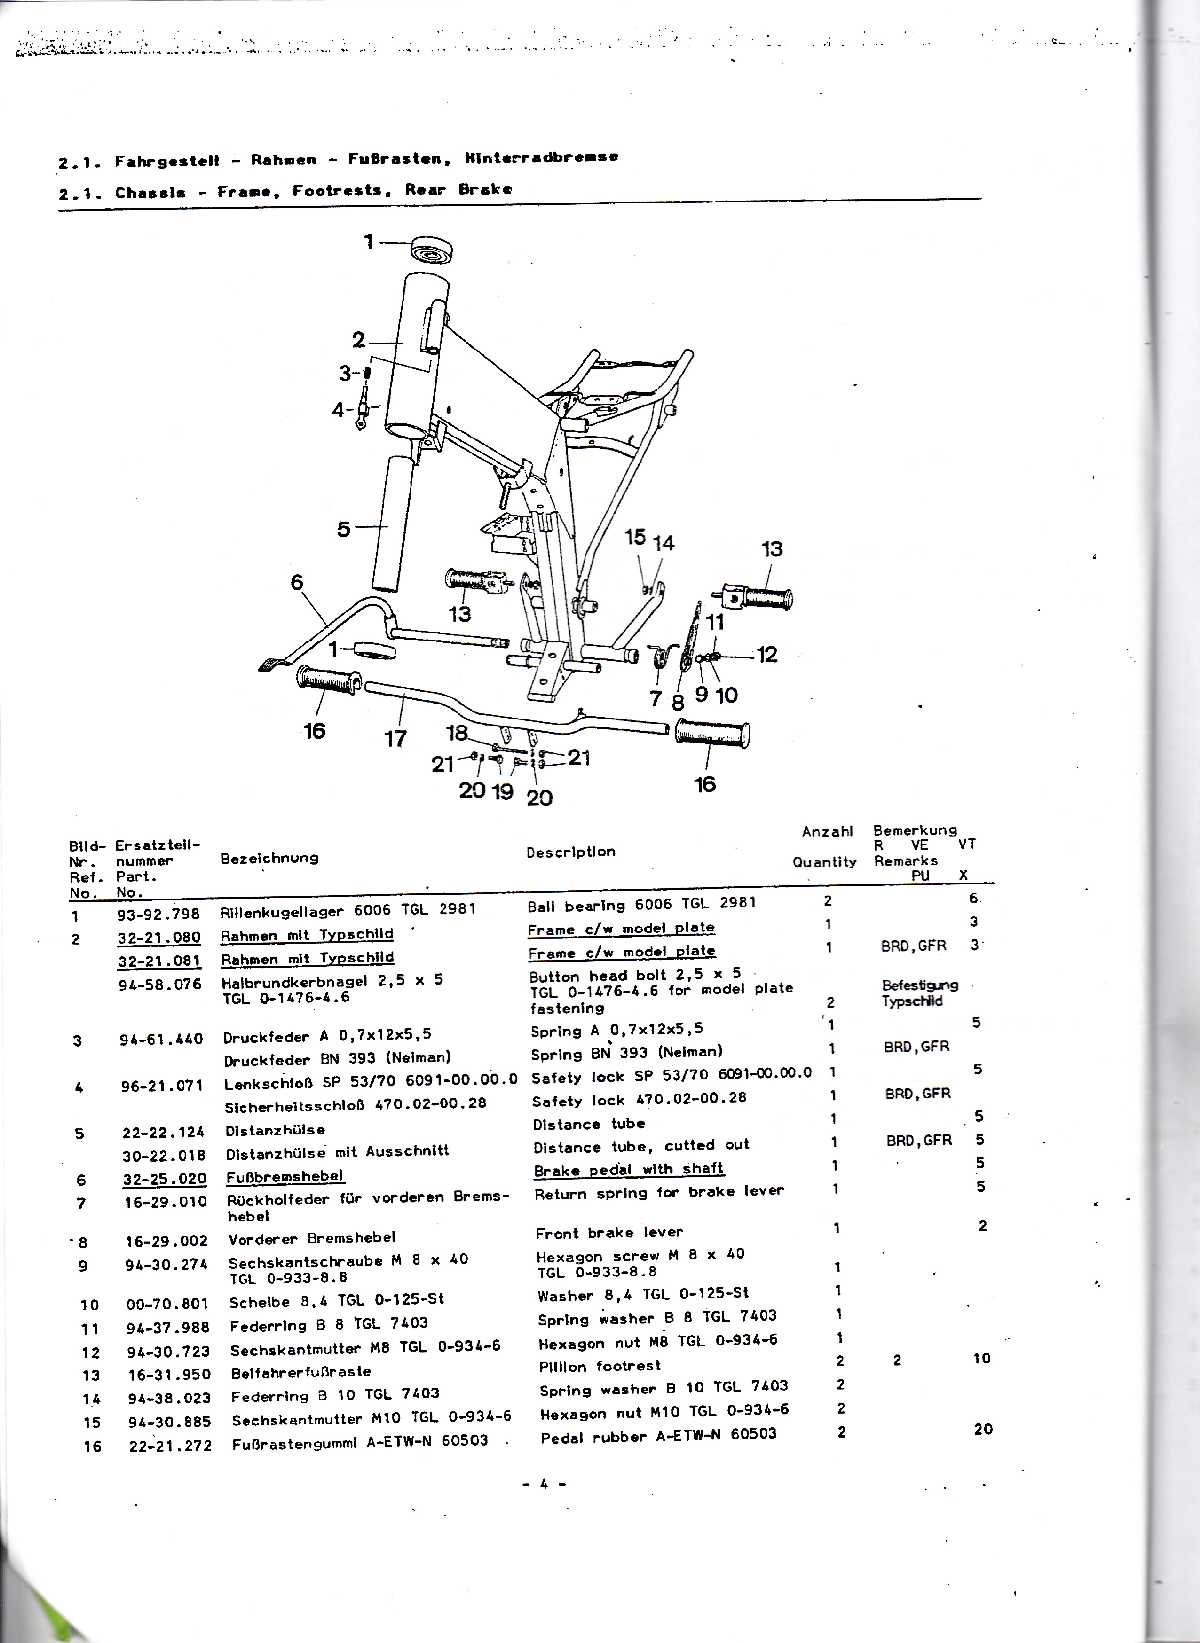 Katalog MZ 150 ETZ, MZ 125 ETZ - 2-1. Fahrgestell - Ratmeen - FuBrasten, Hinterradbresese 2.1. Chassis - Frame, Footrests. Rear Brake 